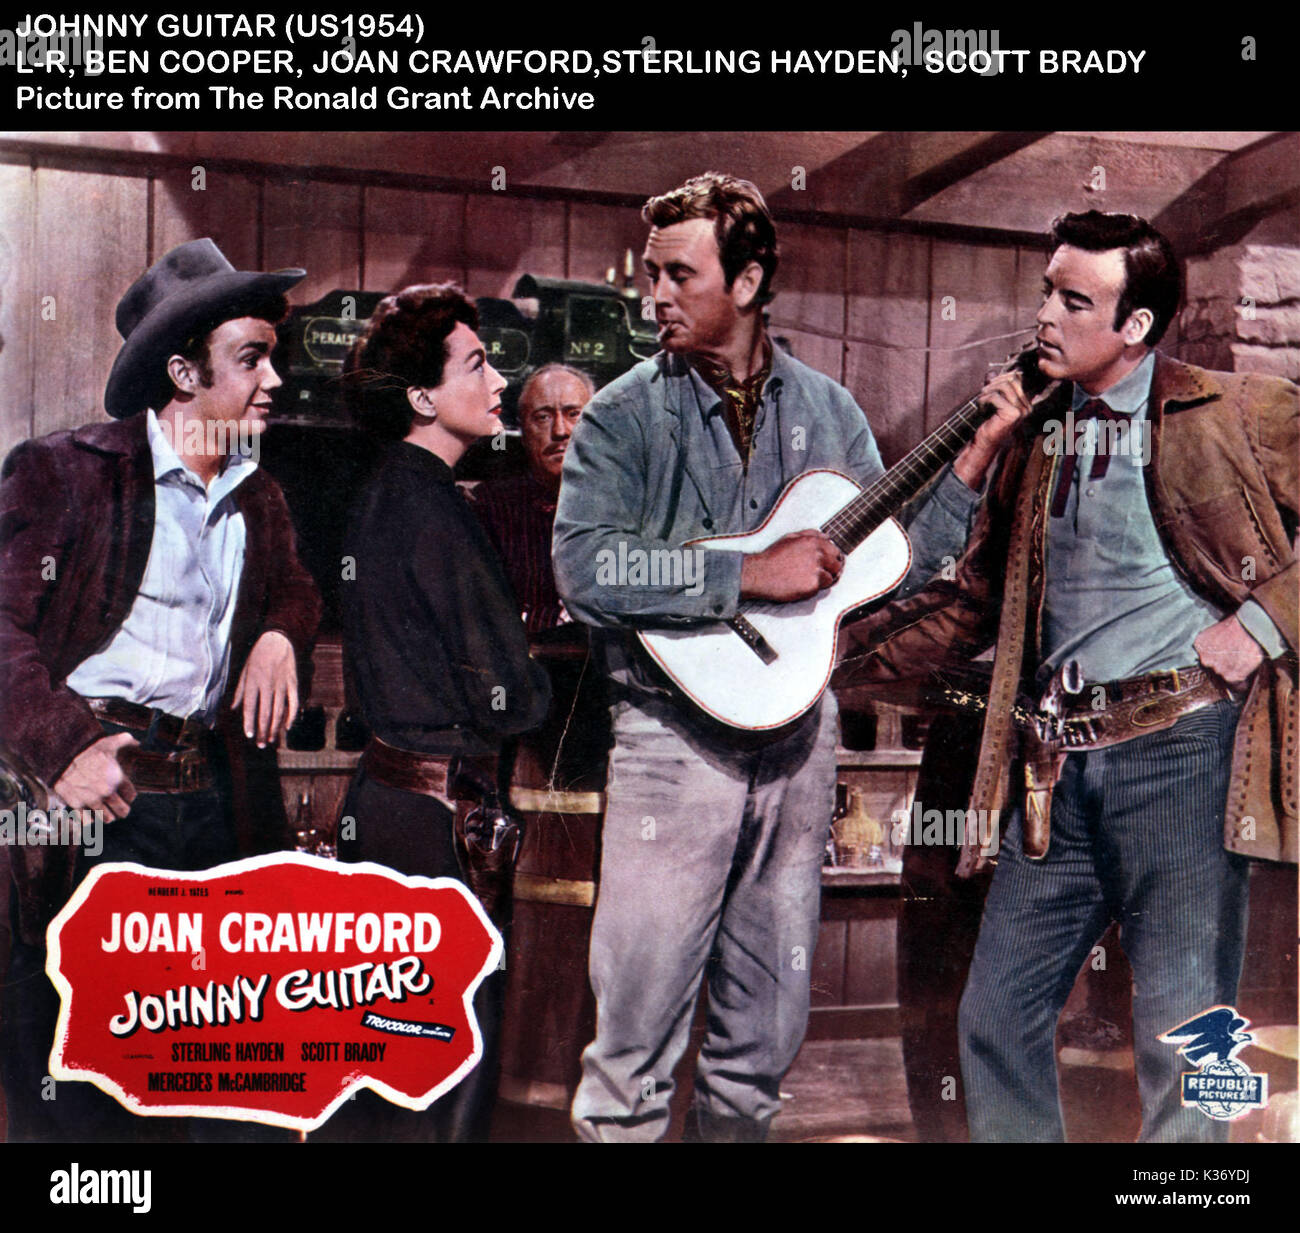 JOHNNY GUITAR L-R, BEN COOPER, JOAN CRAWFORD, STERLING HAYDEN, SCOTT BRADY Stock Photo